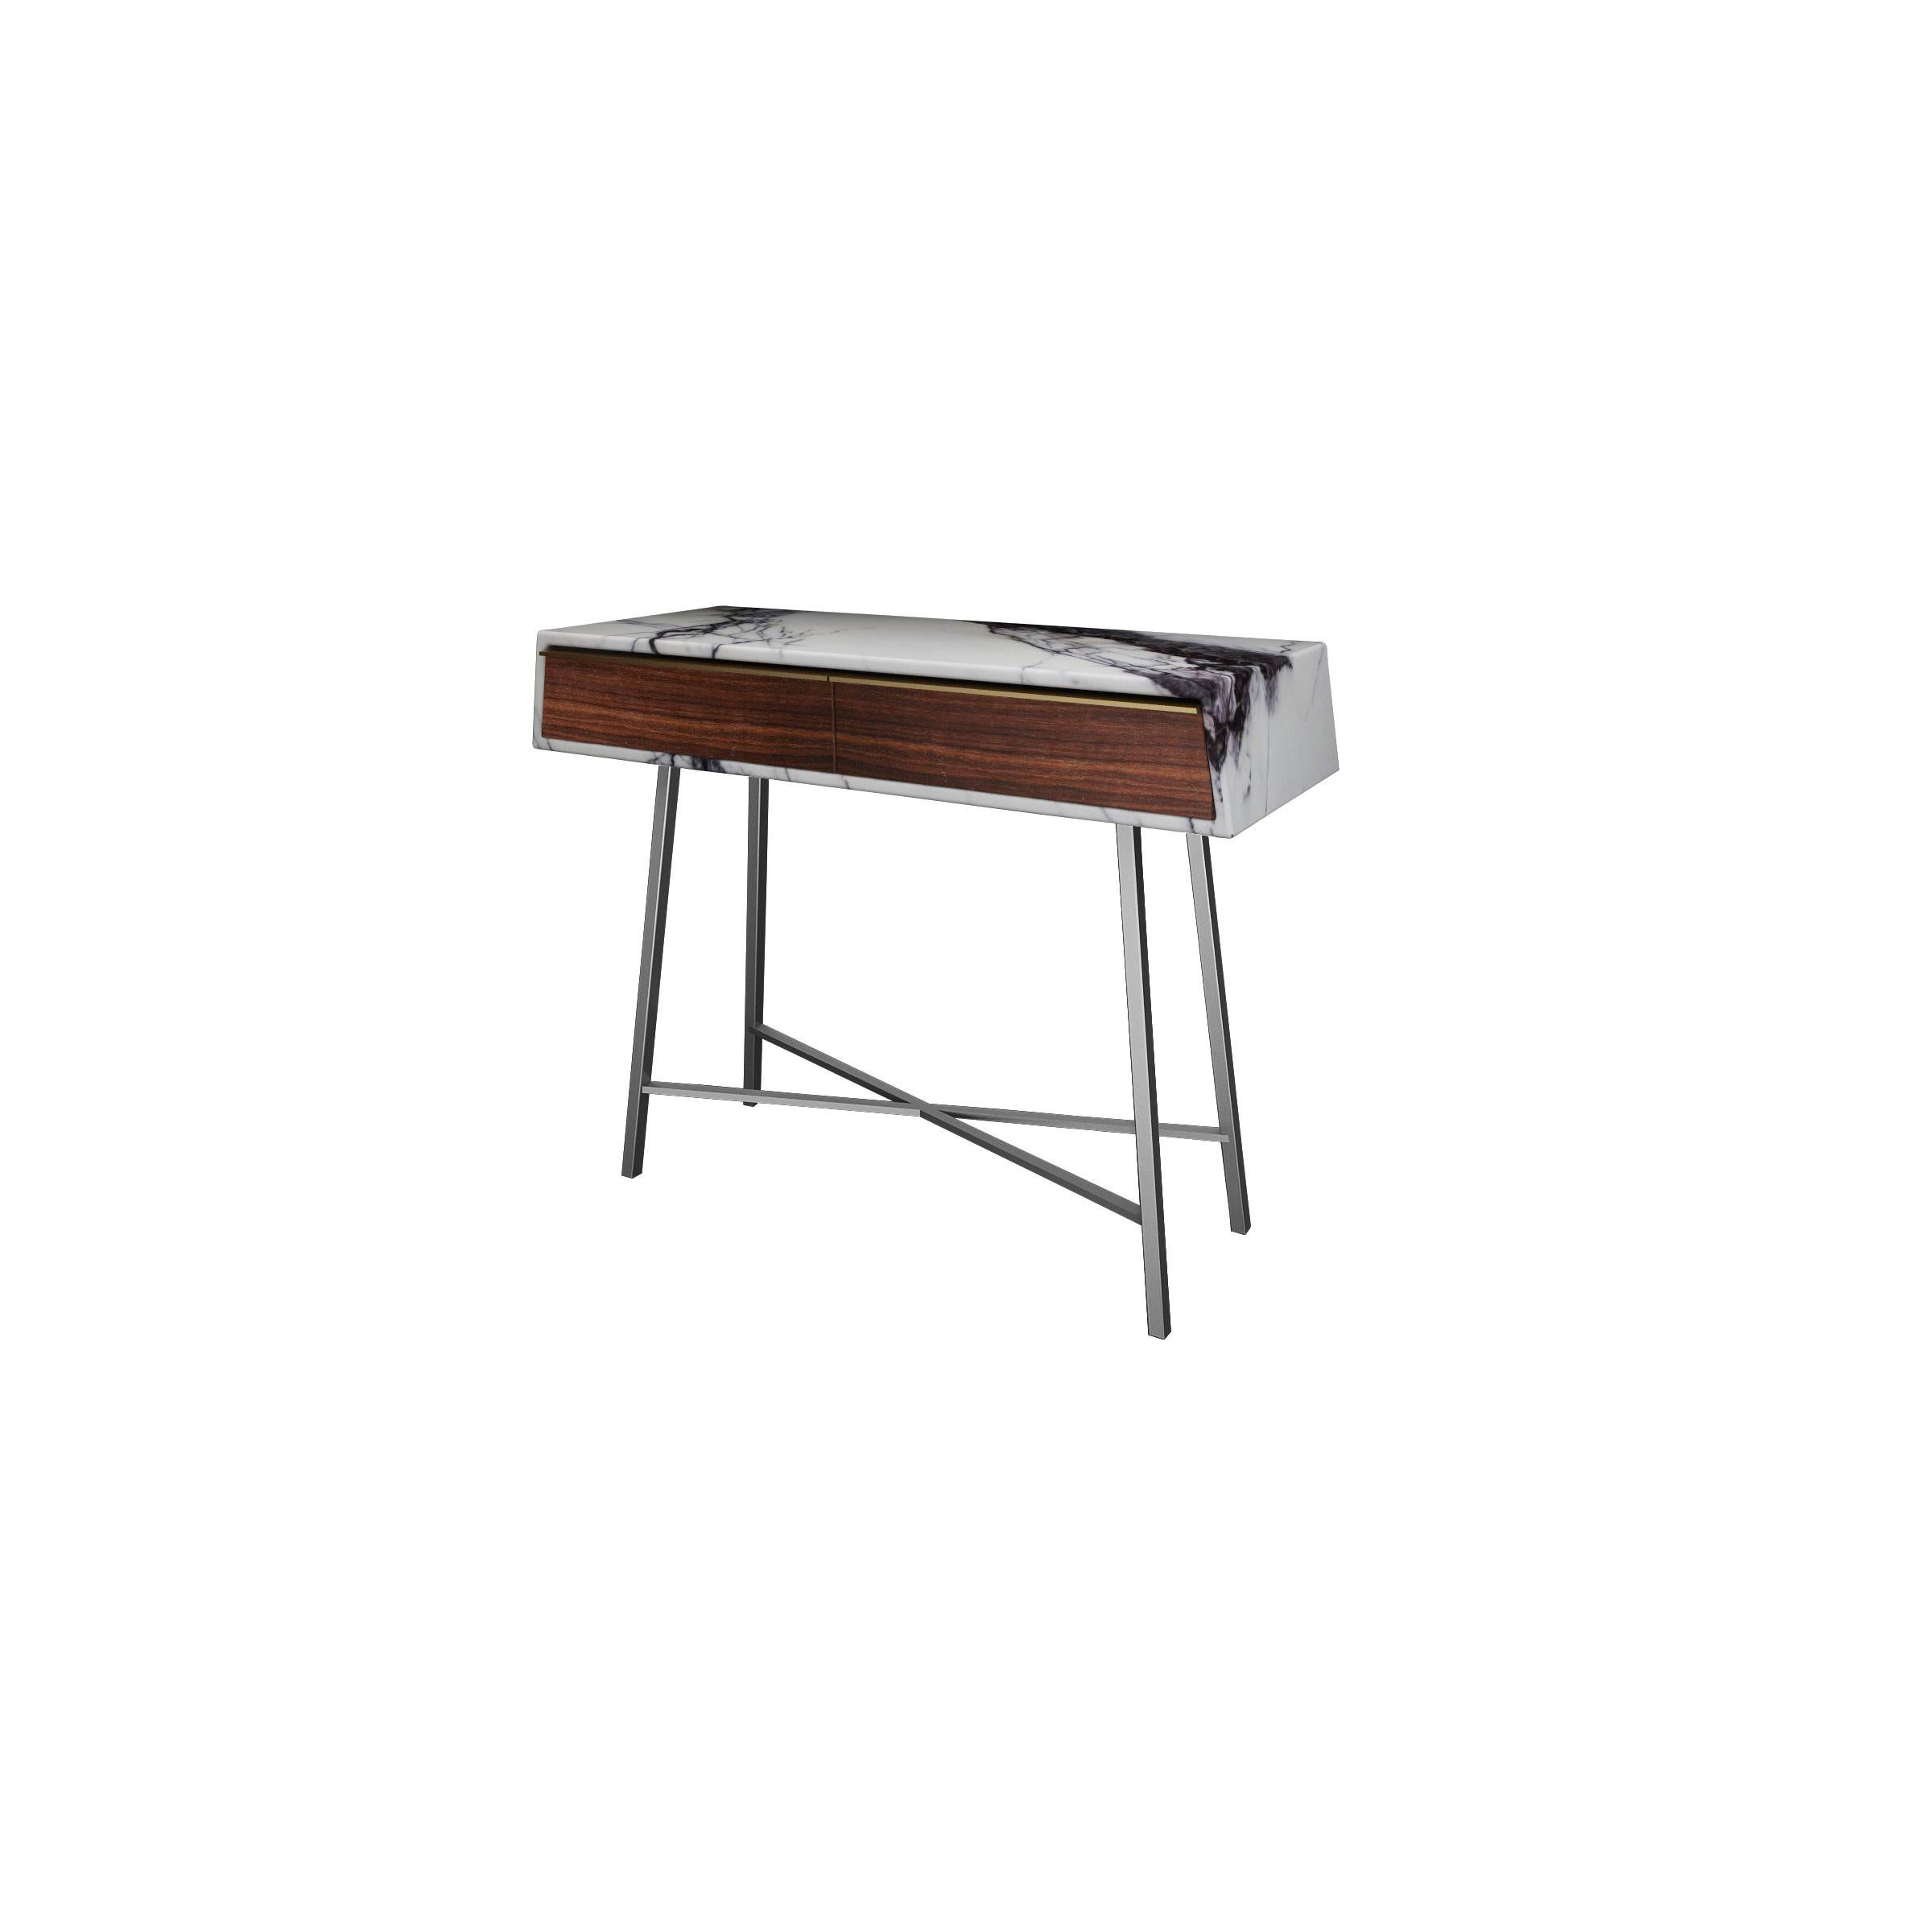 Scandinavian Modern NORDST JESSICA Console 2 Drawers Table, Black Eagle Marble, Danish Modern Design For Sale